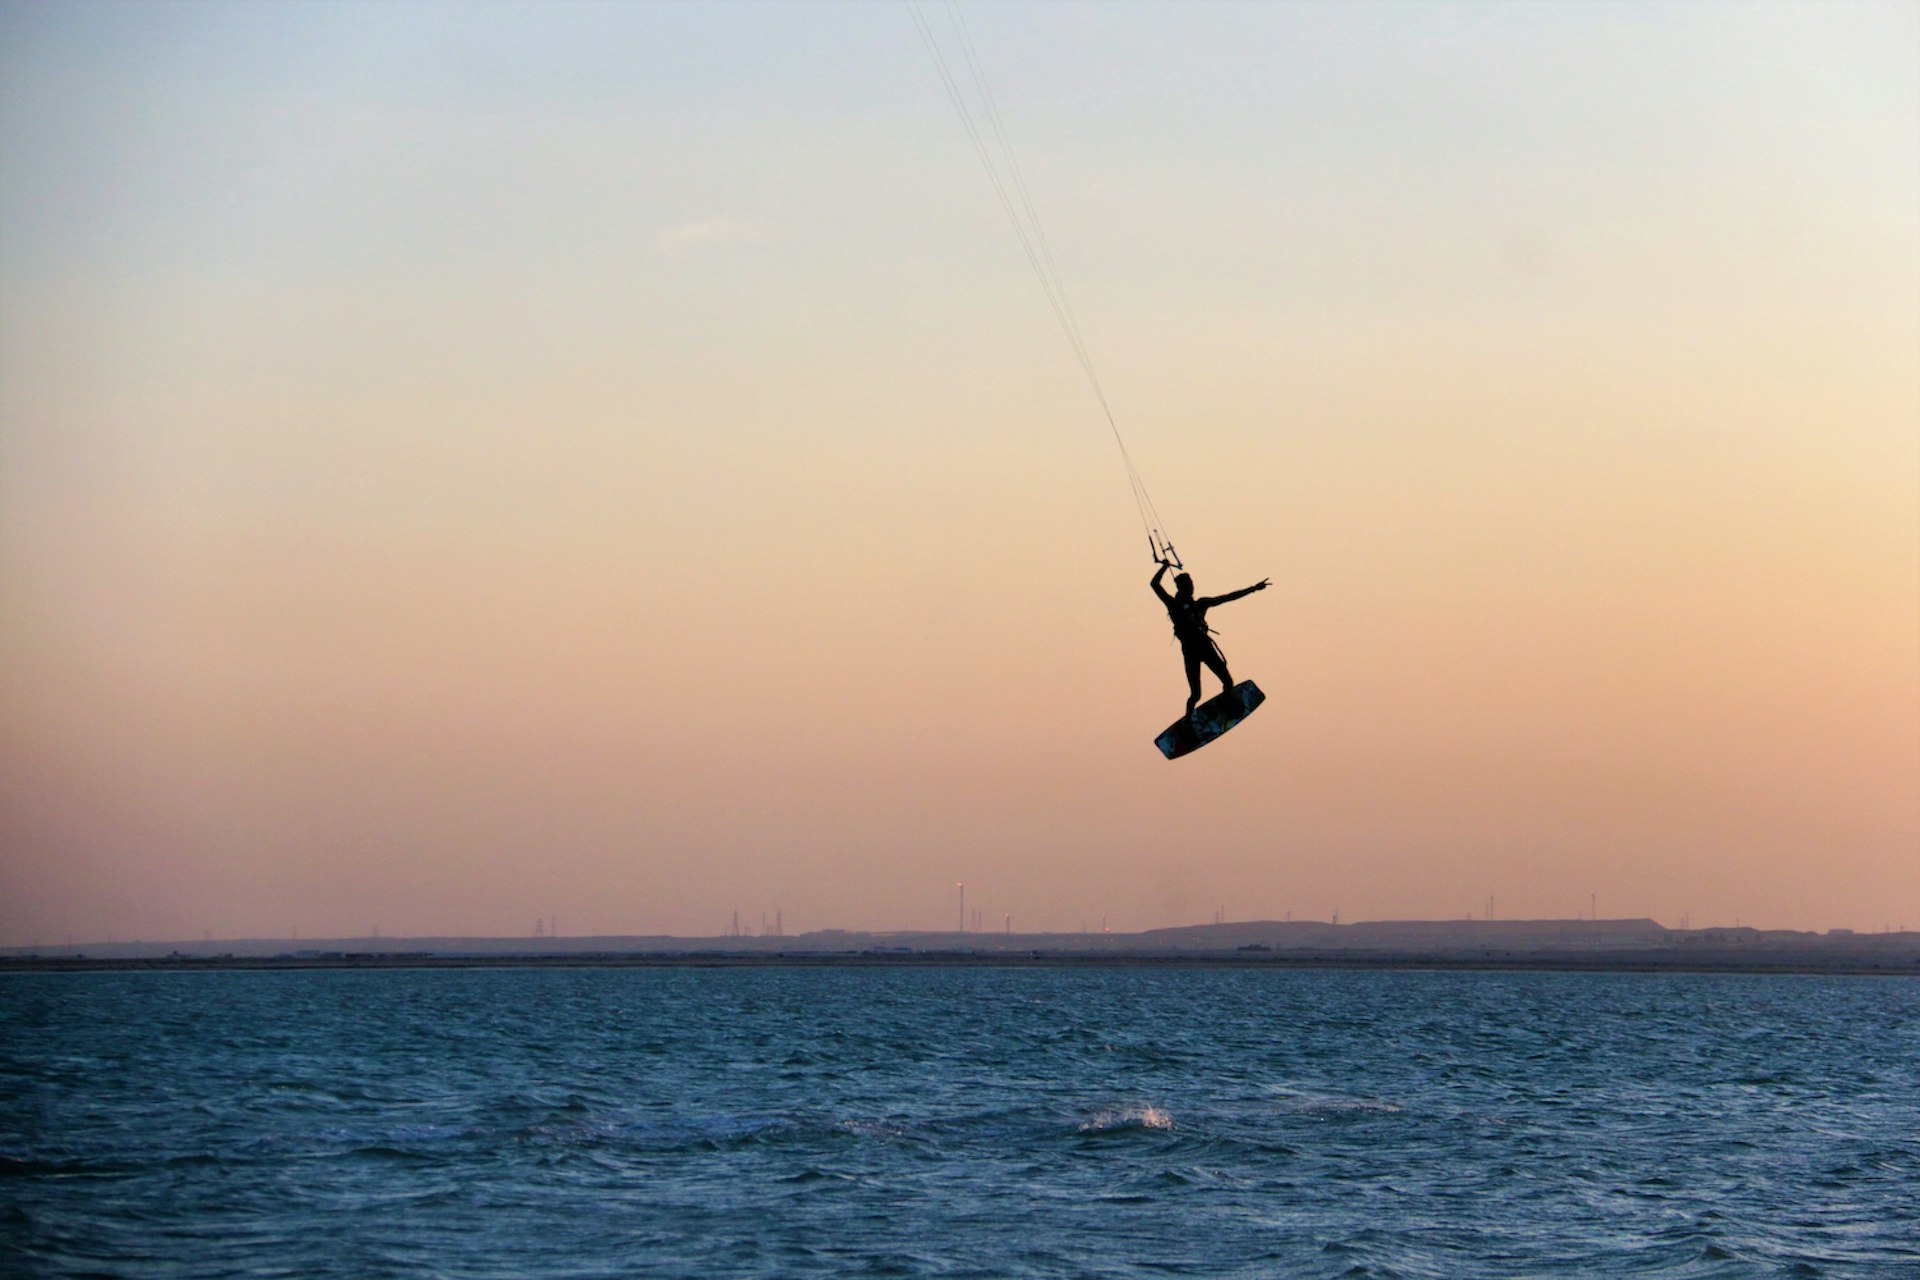 A person kitesurfs at sunset off a beach in Qatar, Arabian Peninsula, Middle East